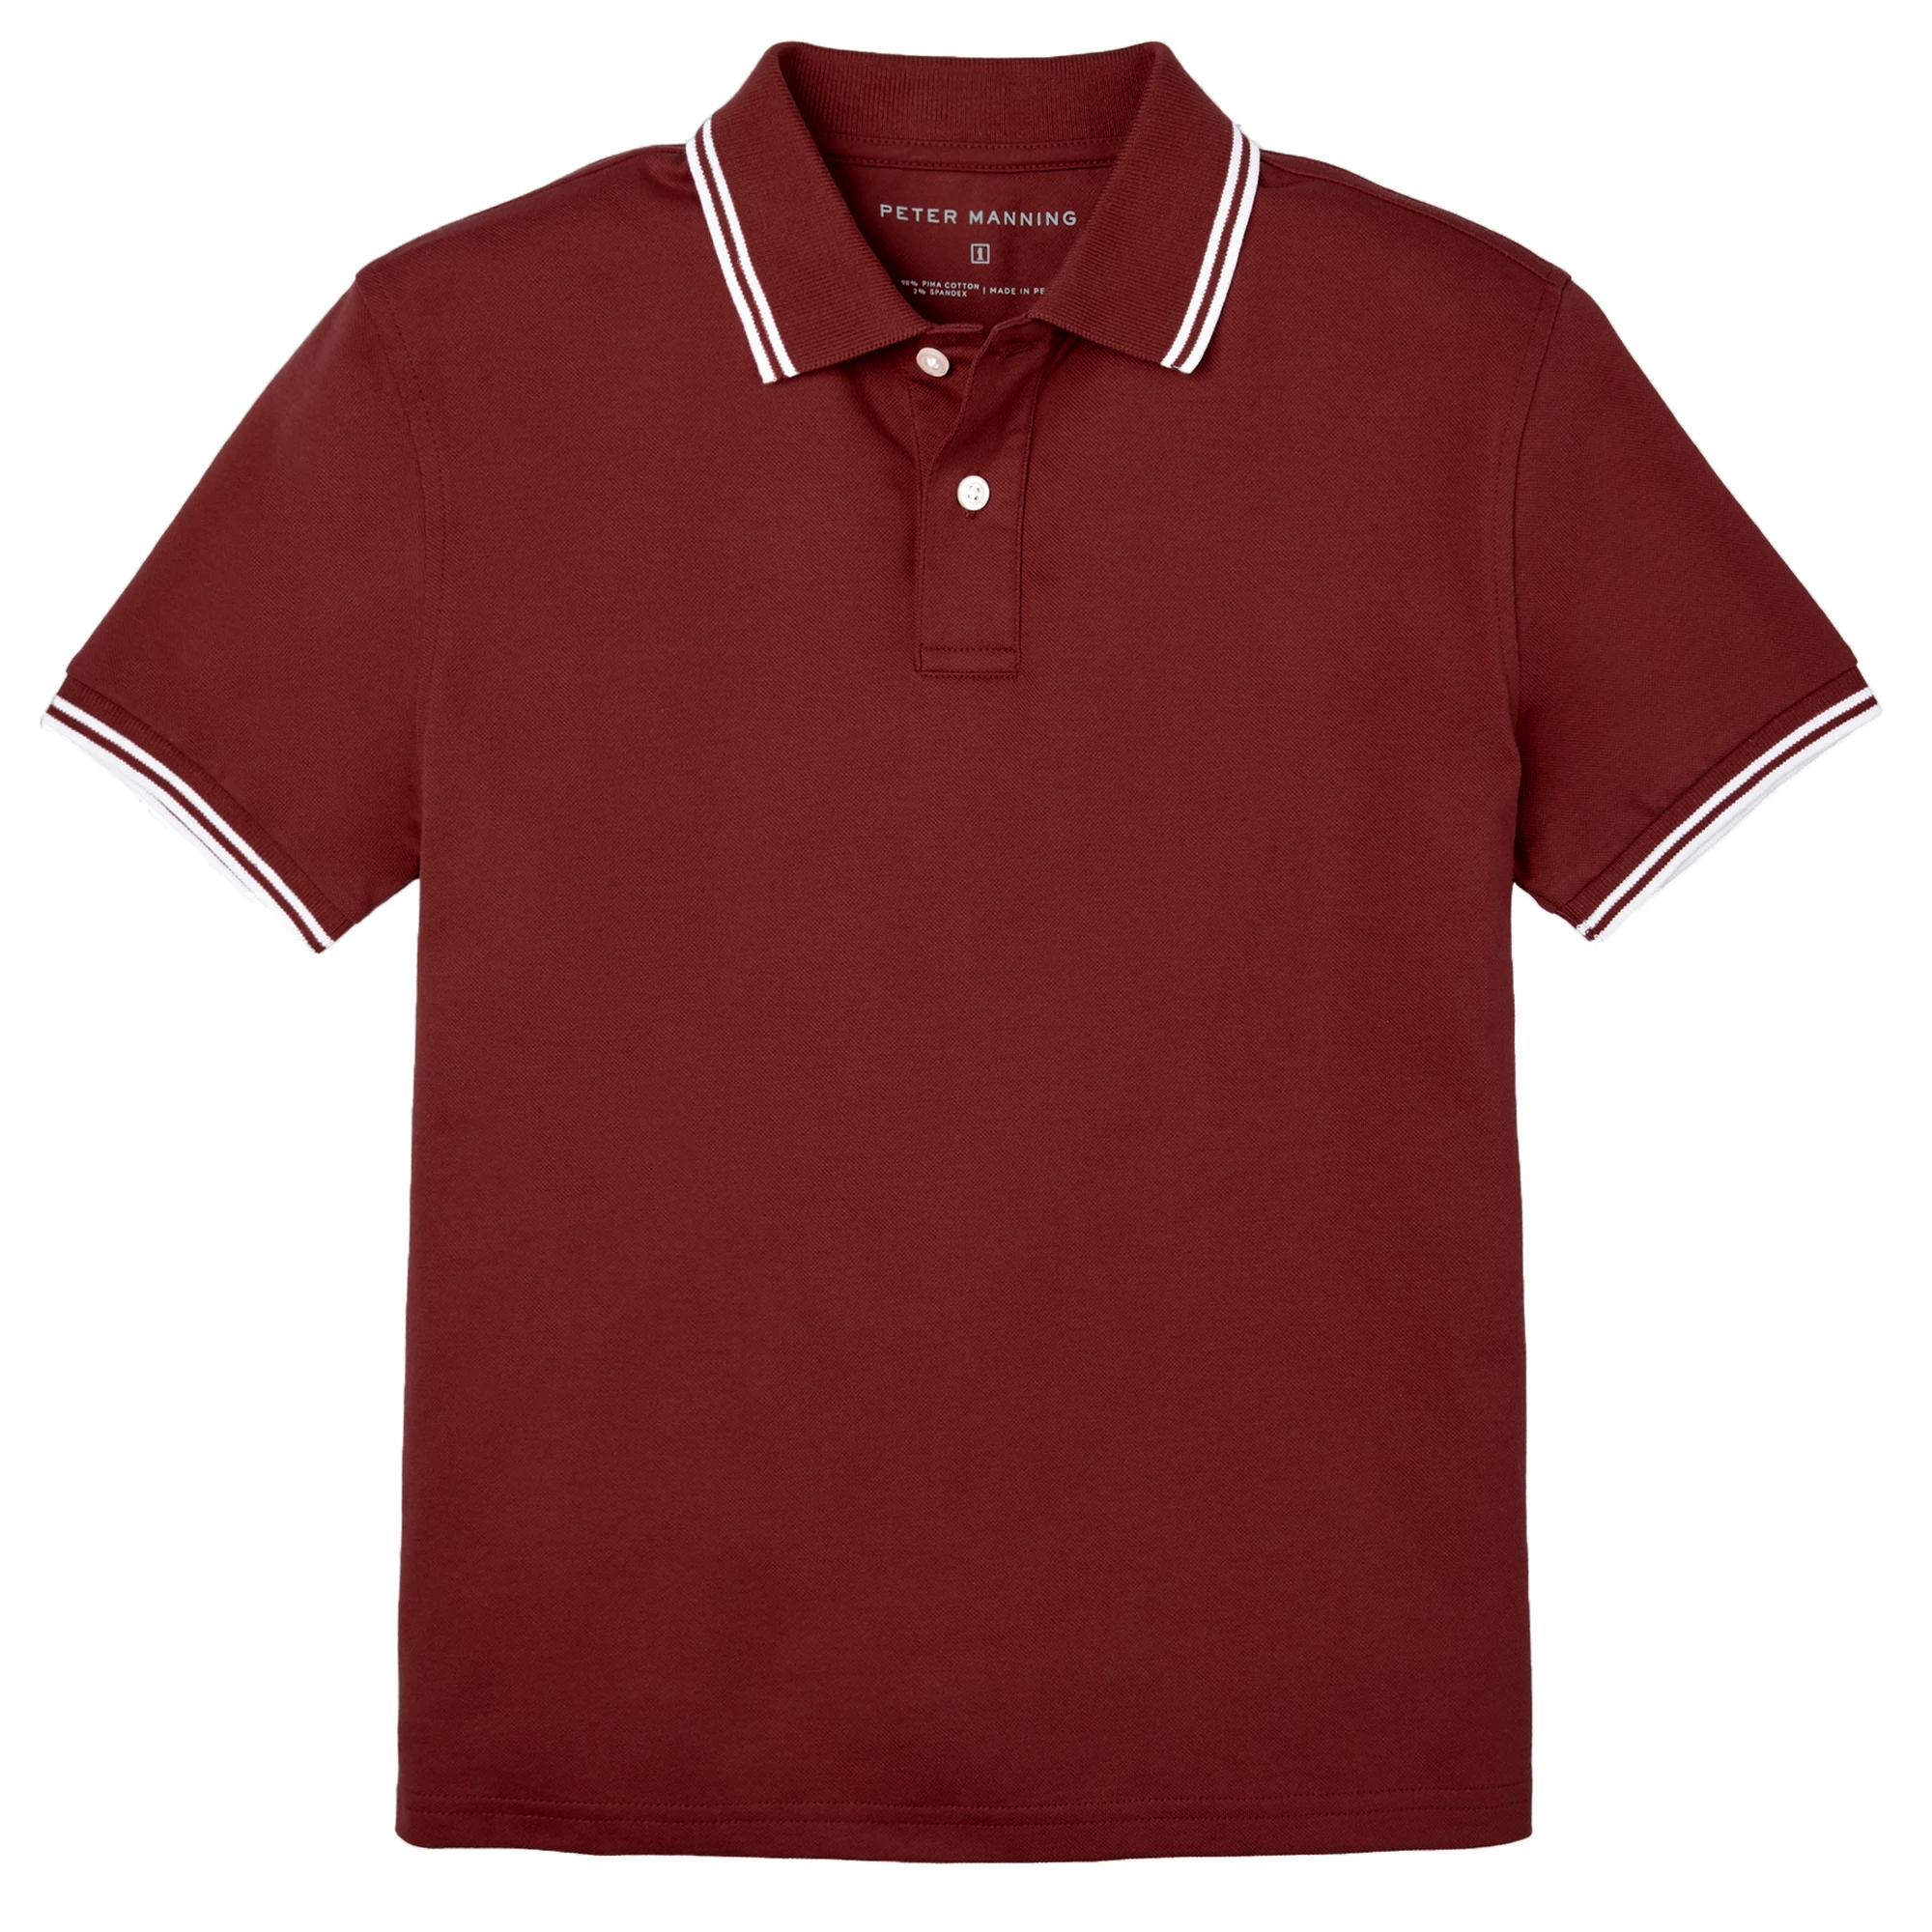 James Polo Shirt - Burgundy Tipped